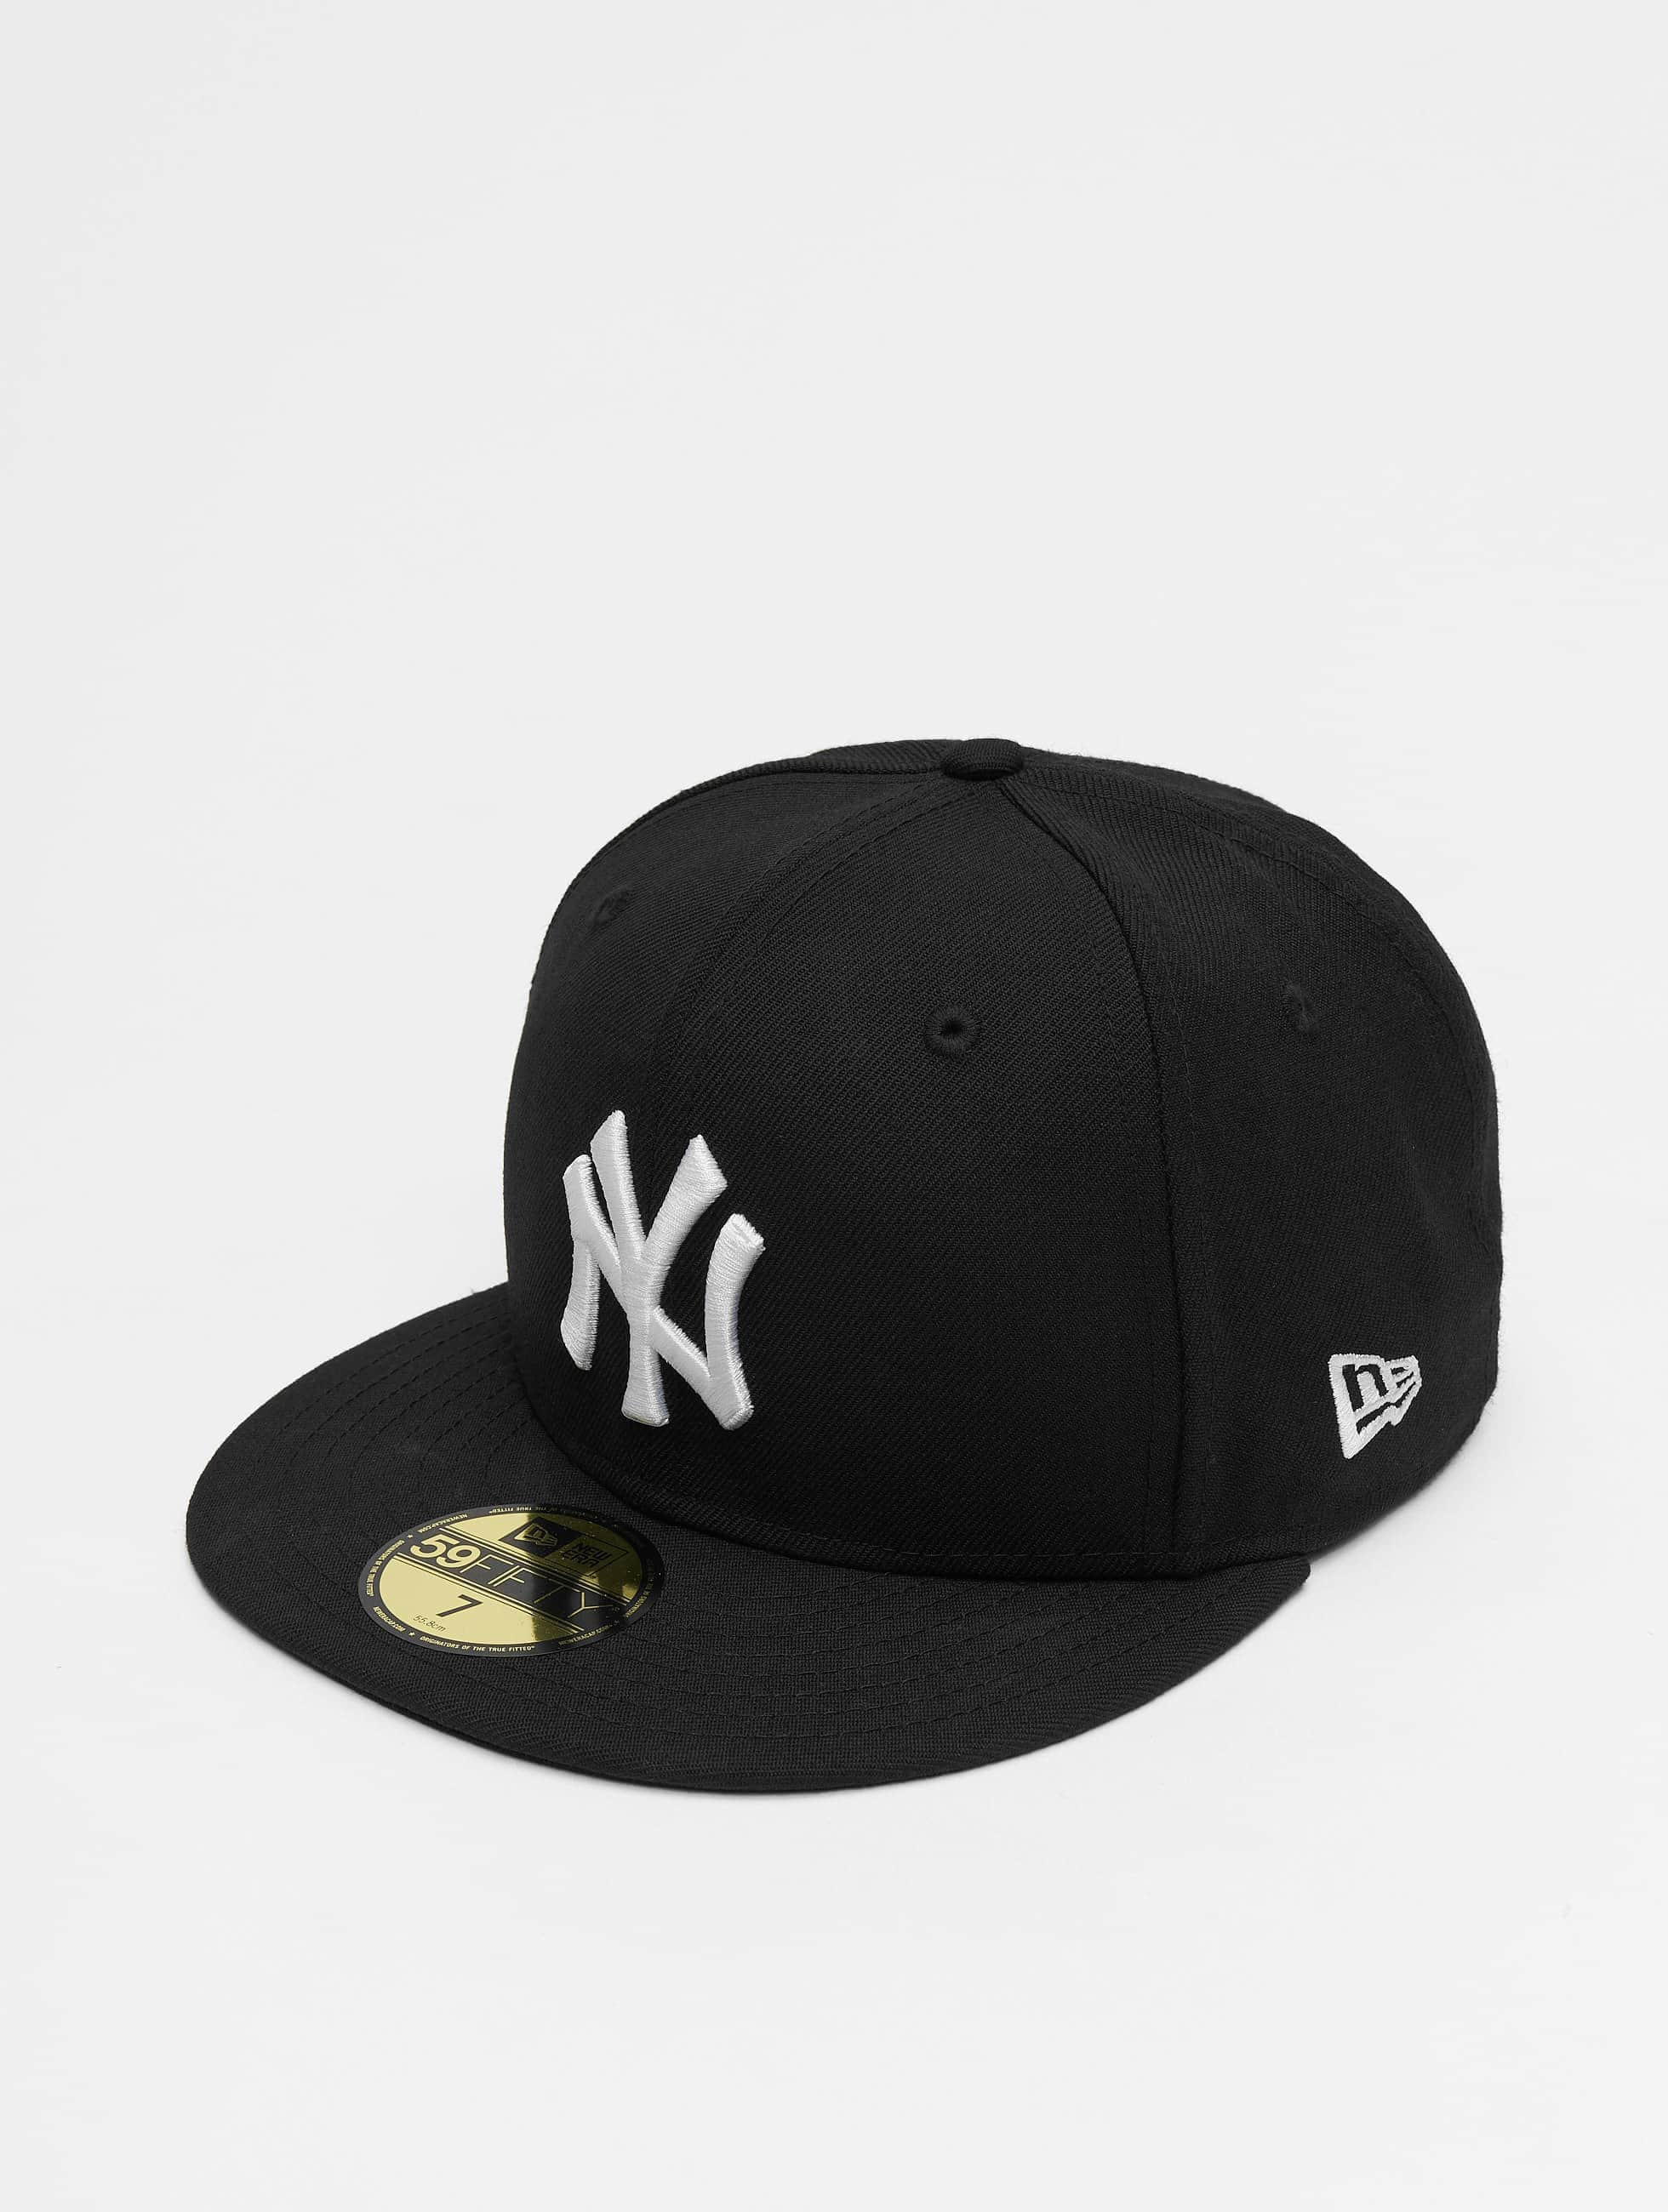 Official New Era New York Yankees MLB Team Fire Black 59FIFTY Fitted Cap  B3239282 B3239282  New Era Cap Slovenia